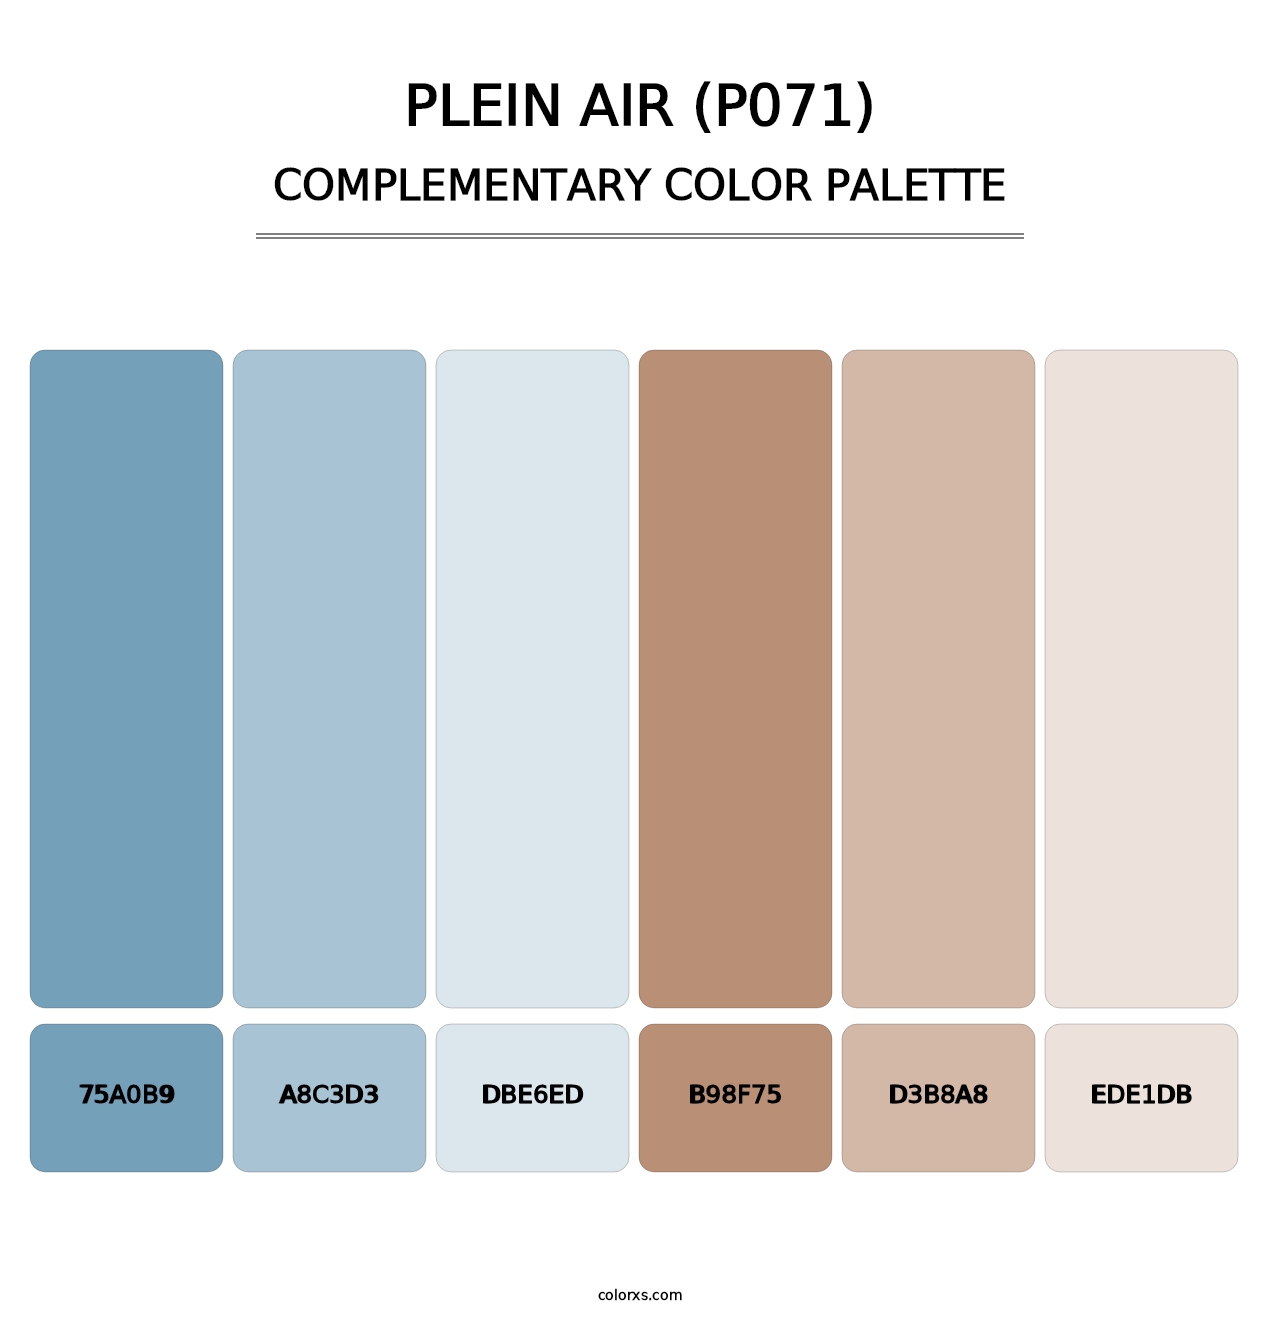 Plein Air (P071) - Complementary Color Palette